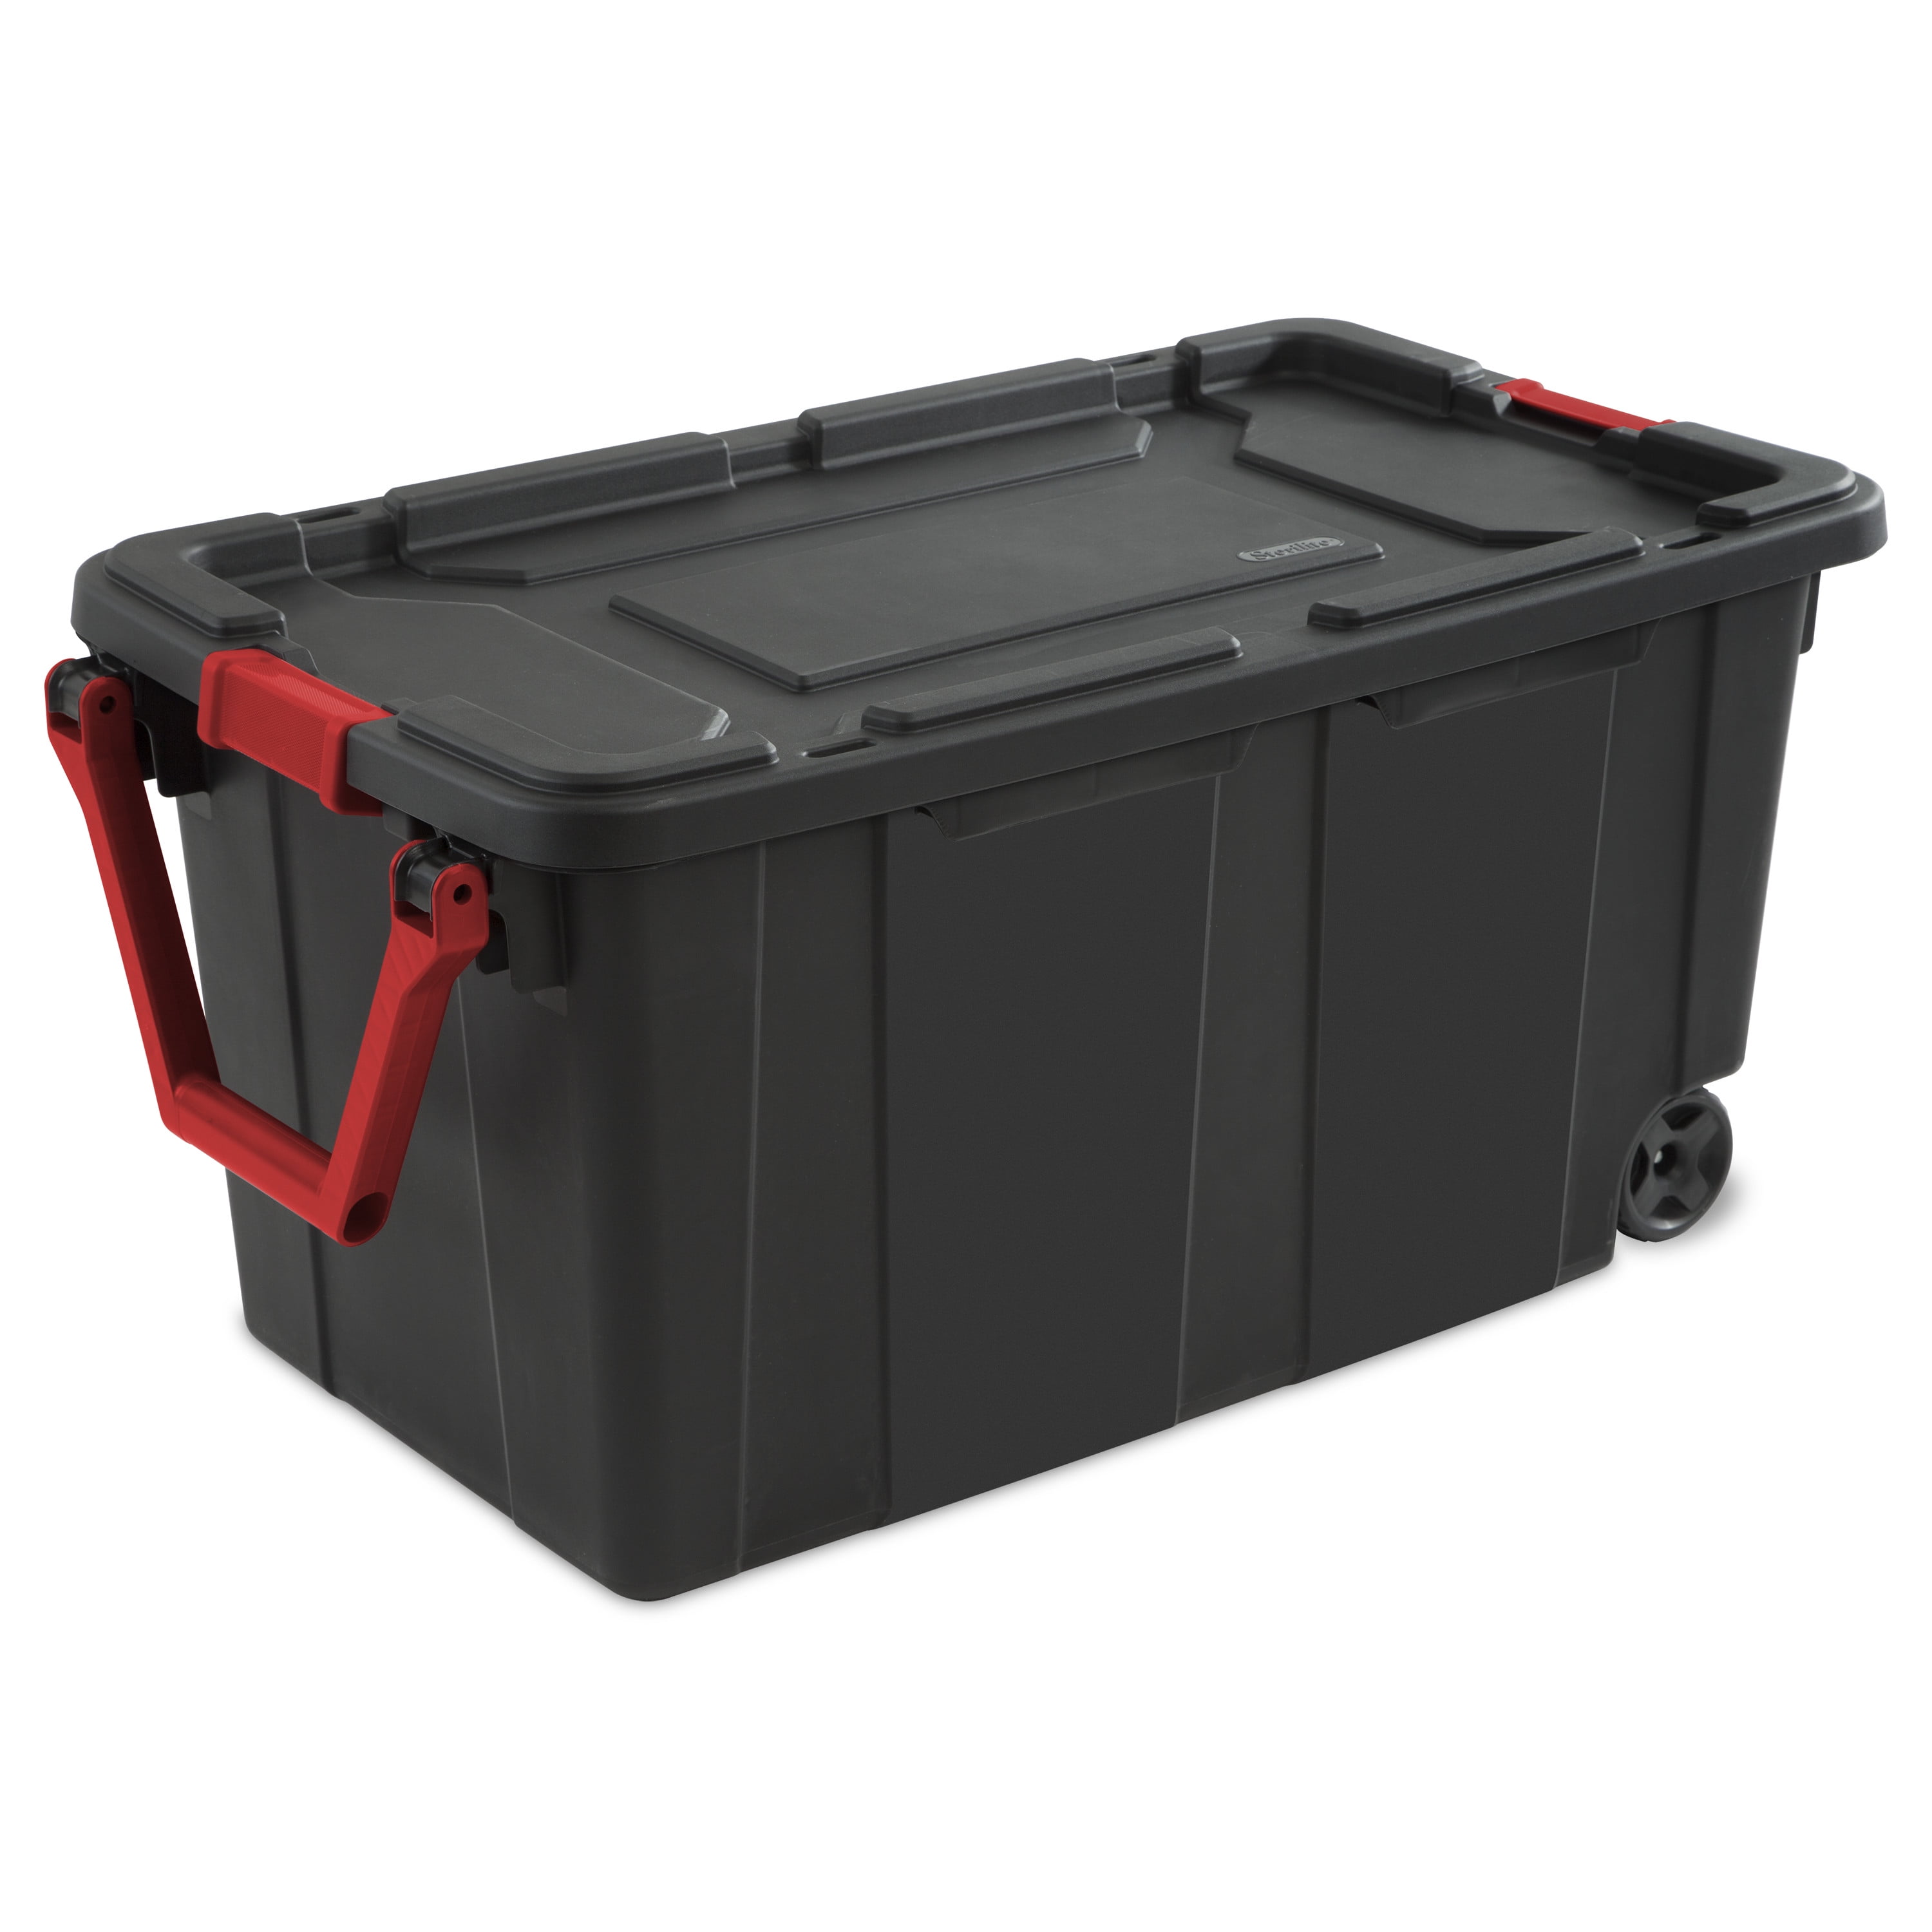 2 PACK Sterilite Latch Tote Storage Box Wheeled 40 Gallon Container Case Wheels 